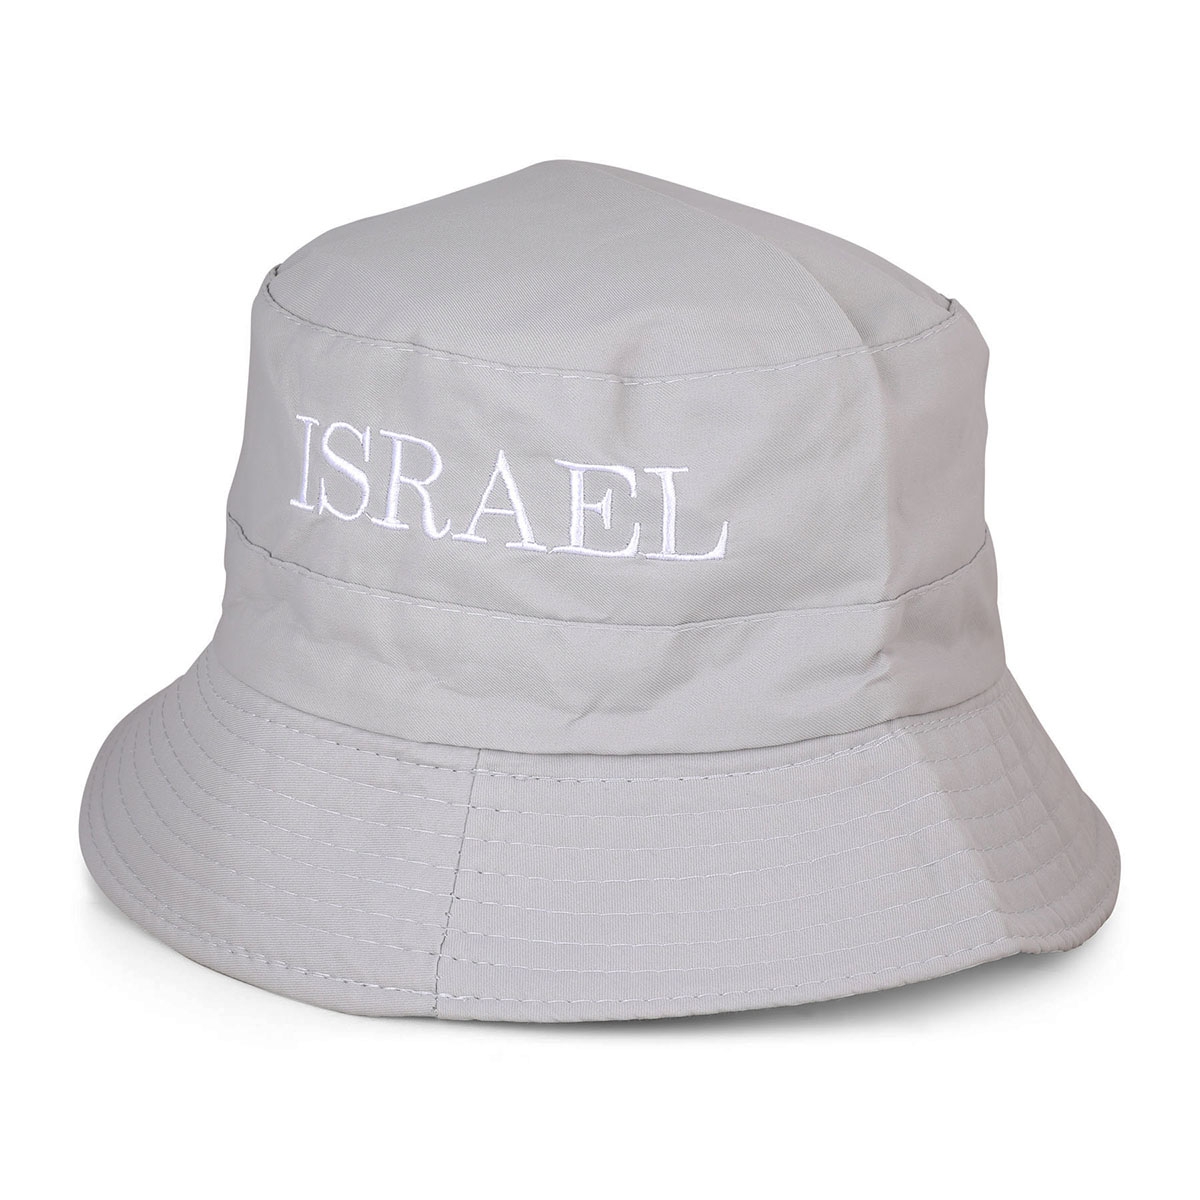 Israel Bucket Hat – Gray, Clothing